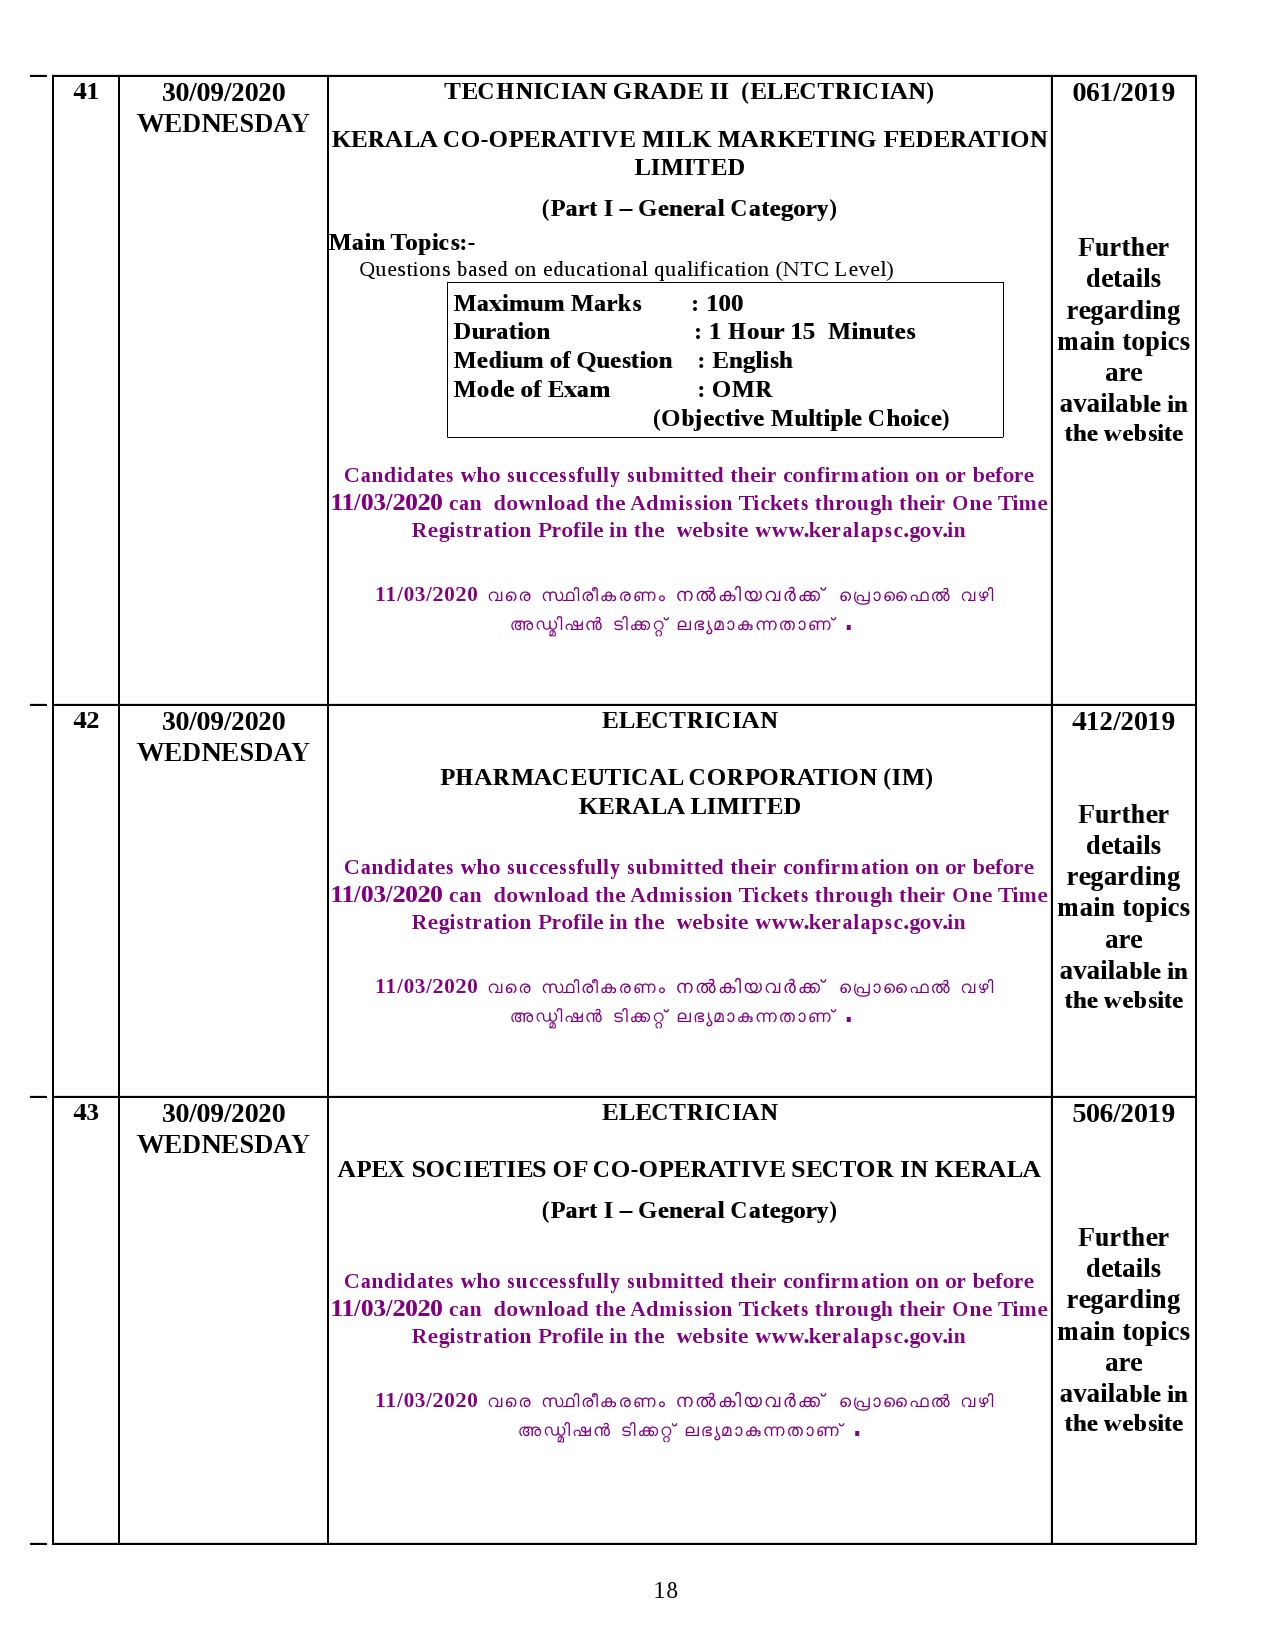 Kerala PSC Exam Calendar September 2020 - Notification Image 18